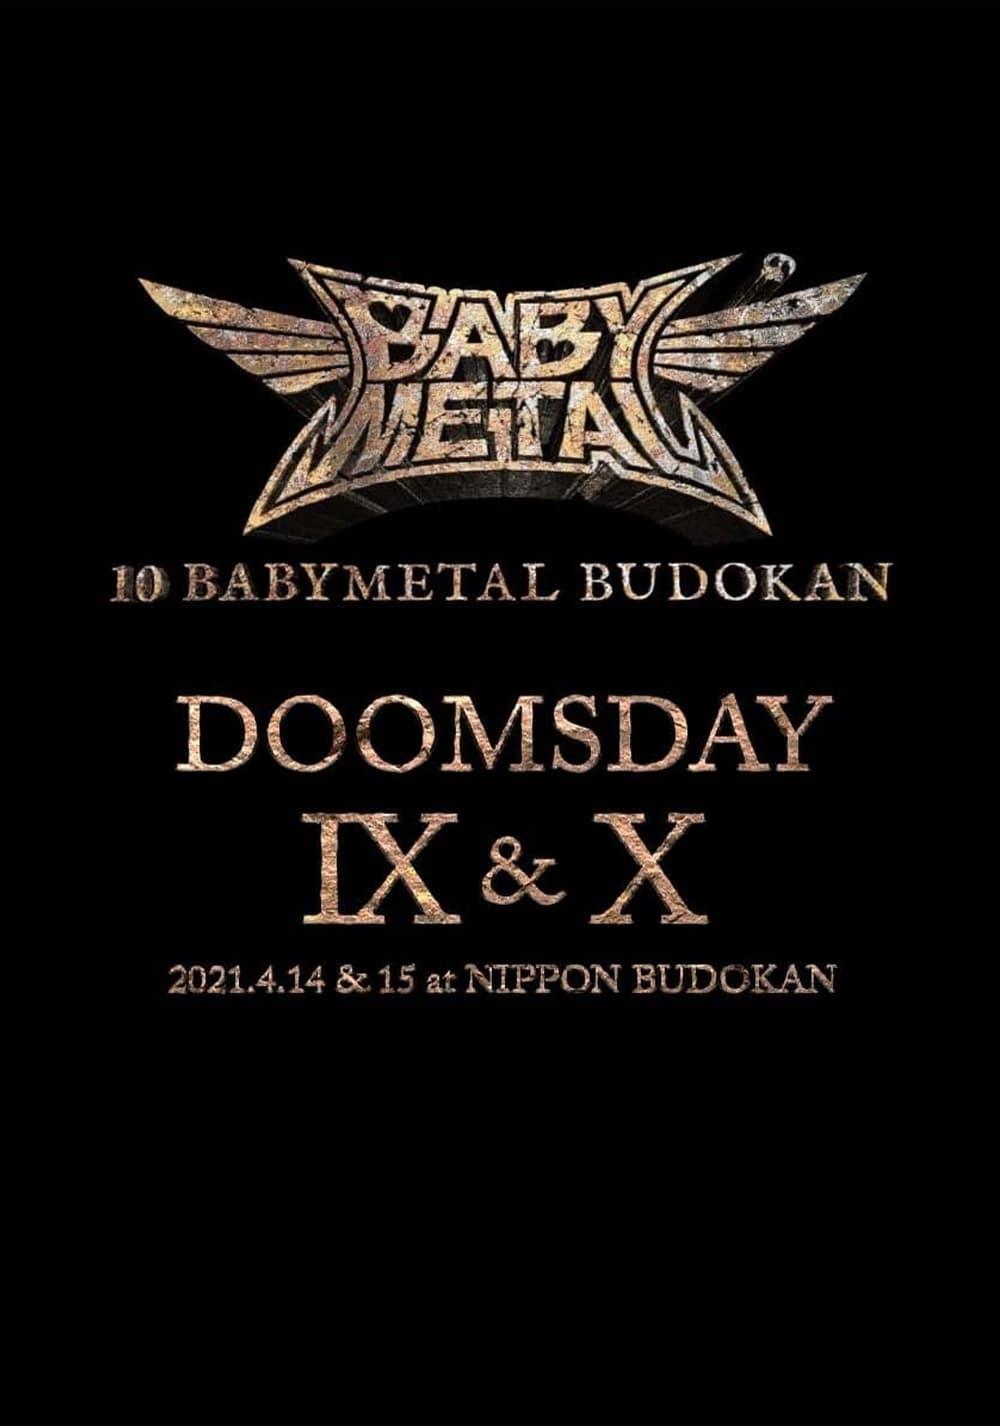 10 BABYMETAL BUDOKAN - DOOMSDAY IX & X poster